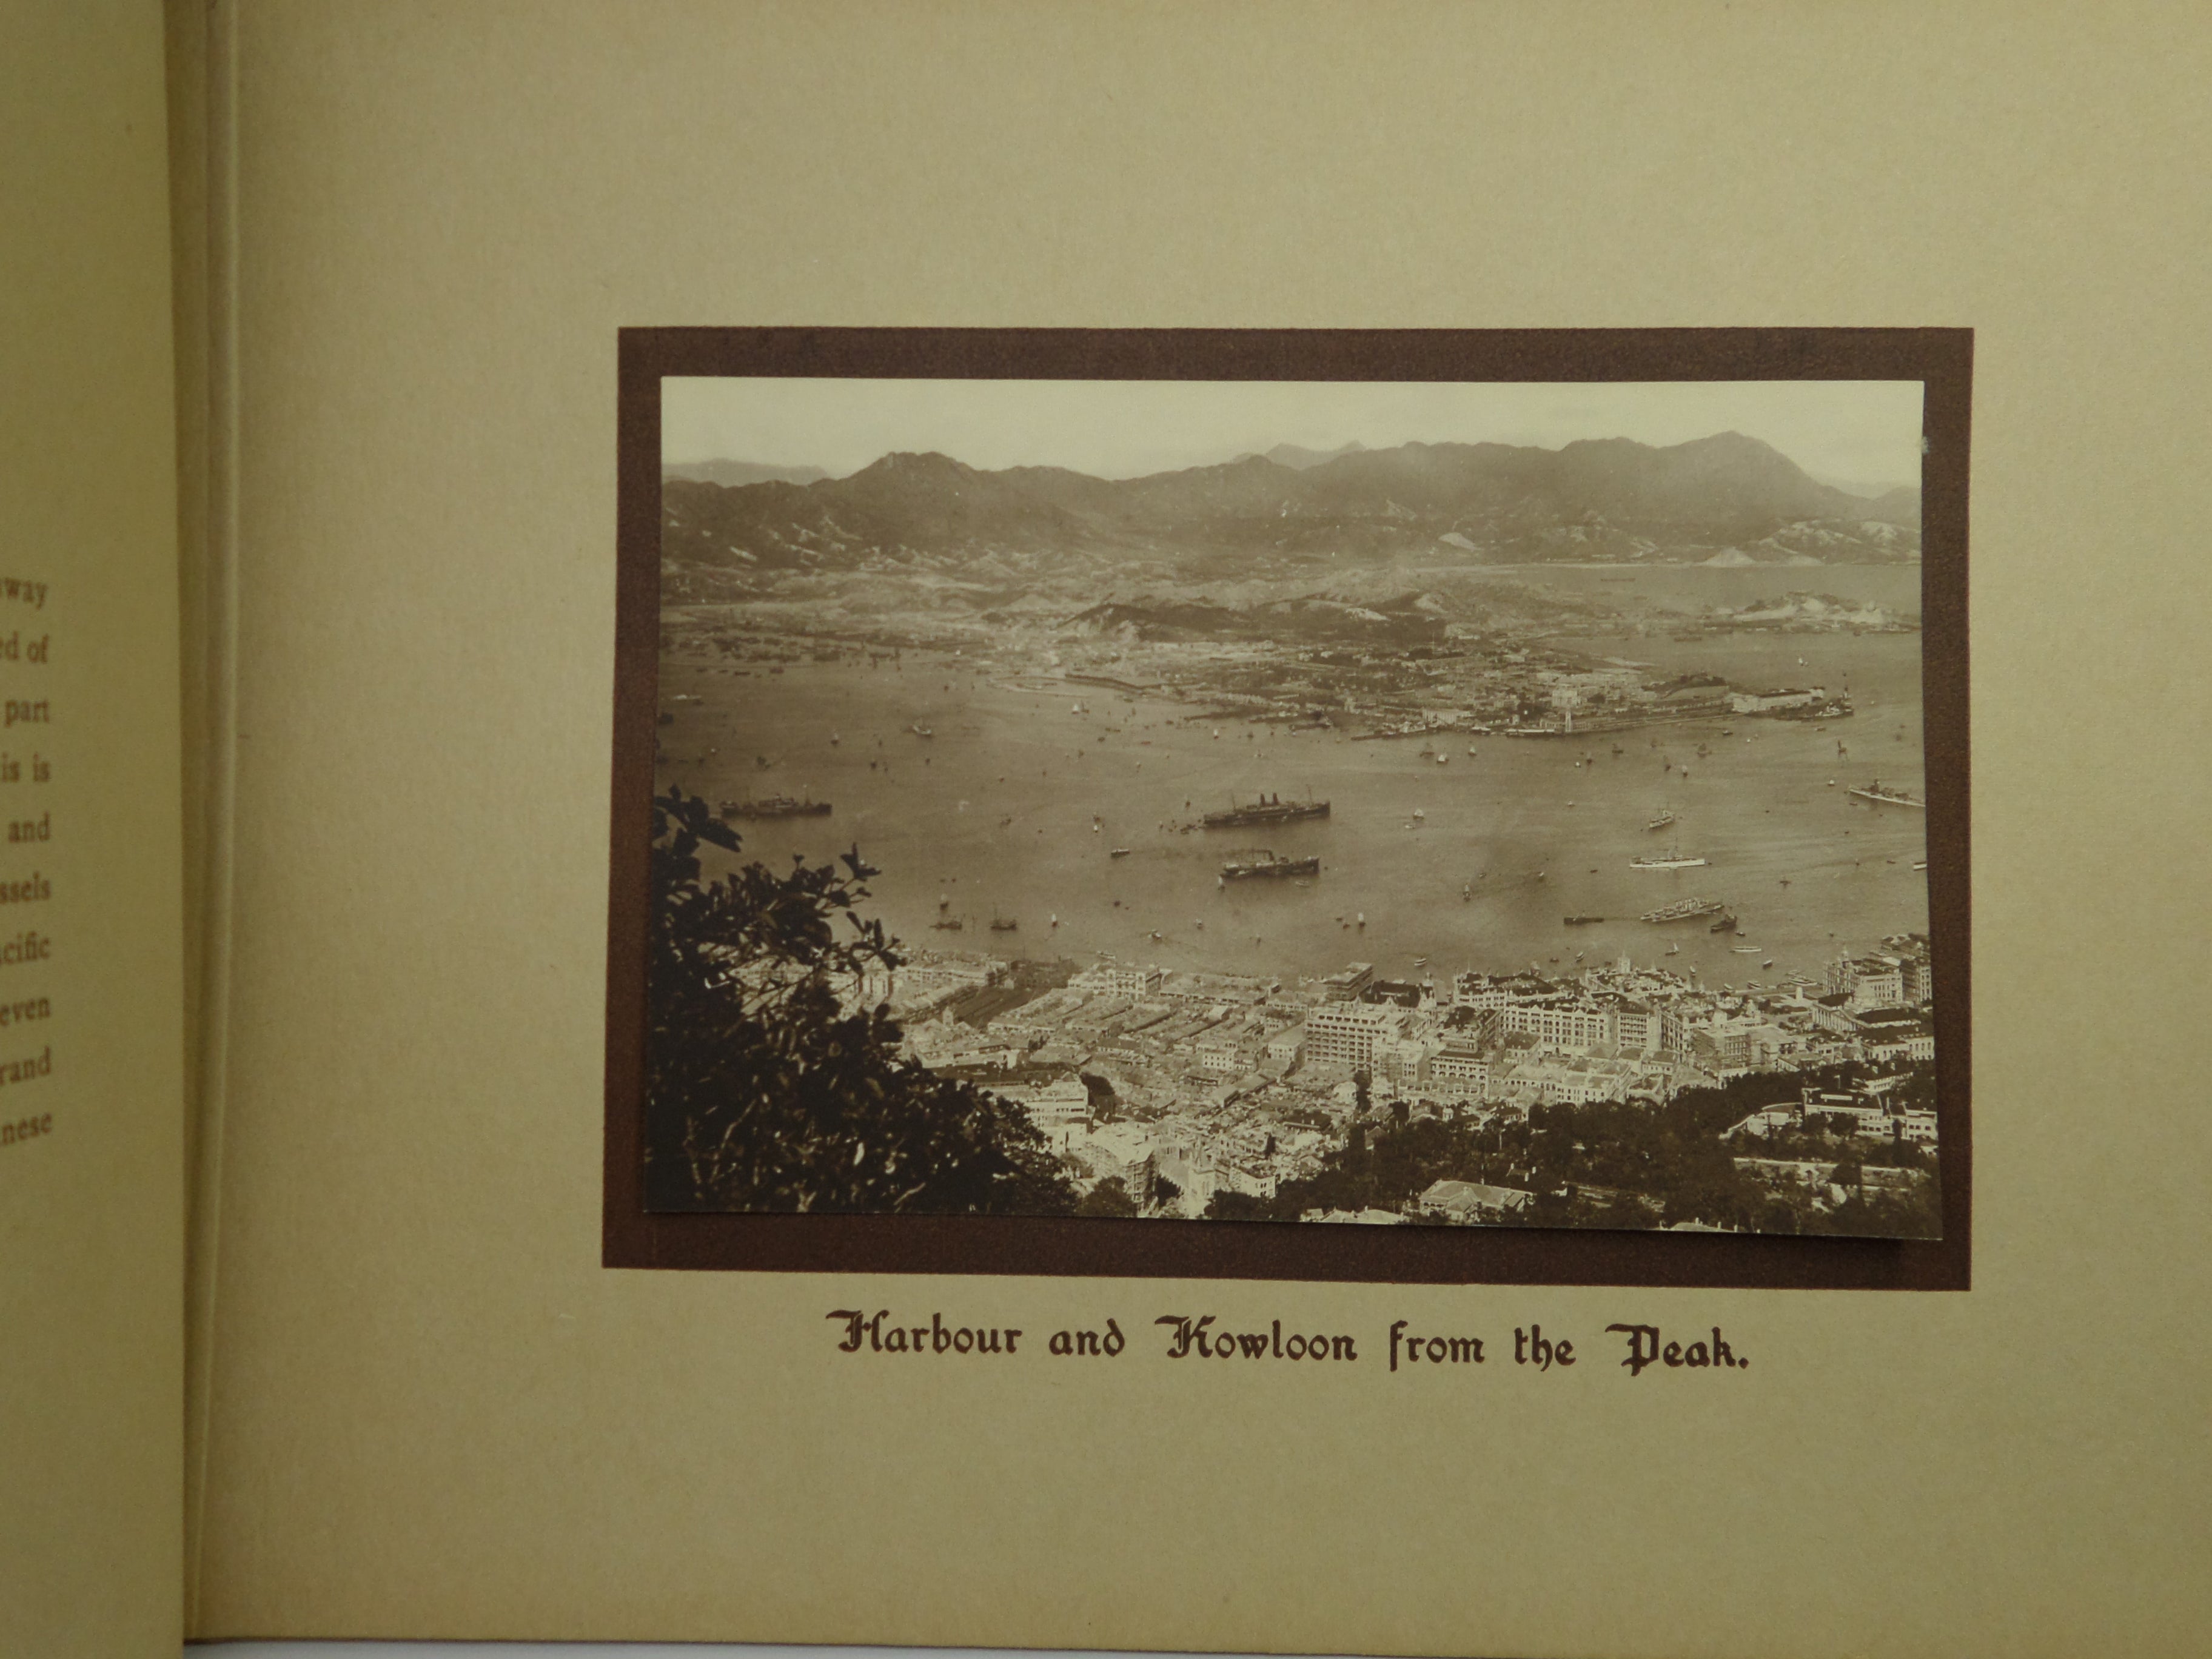 PICTURESQUE HONGKONG - PHOTOGRAPHS BY DENIS H. HAZELL C.1925